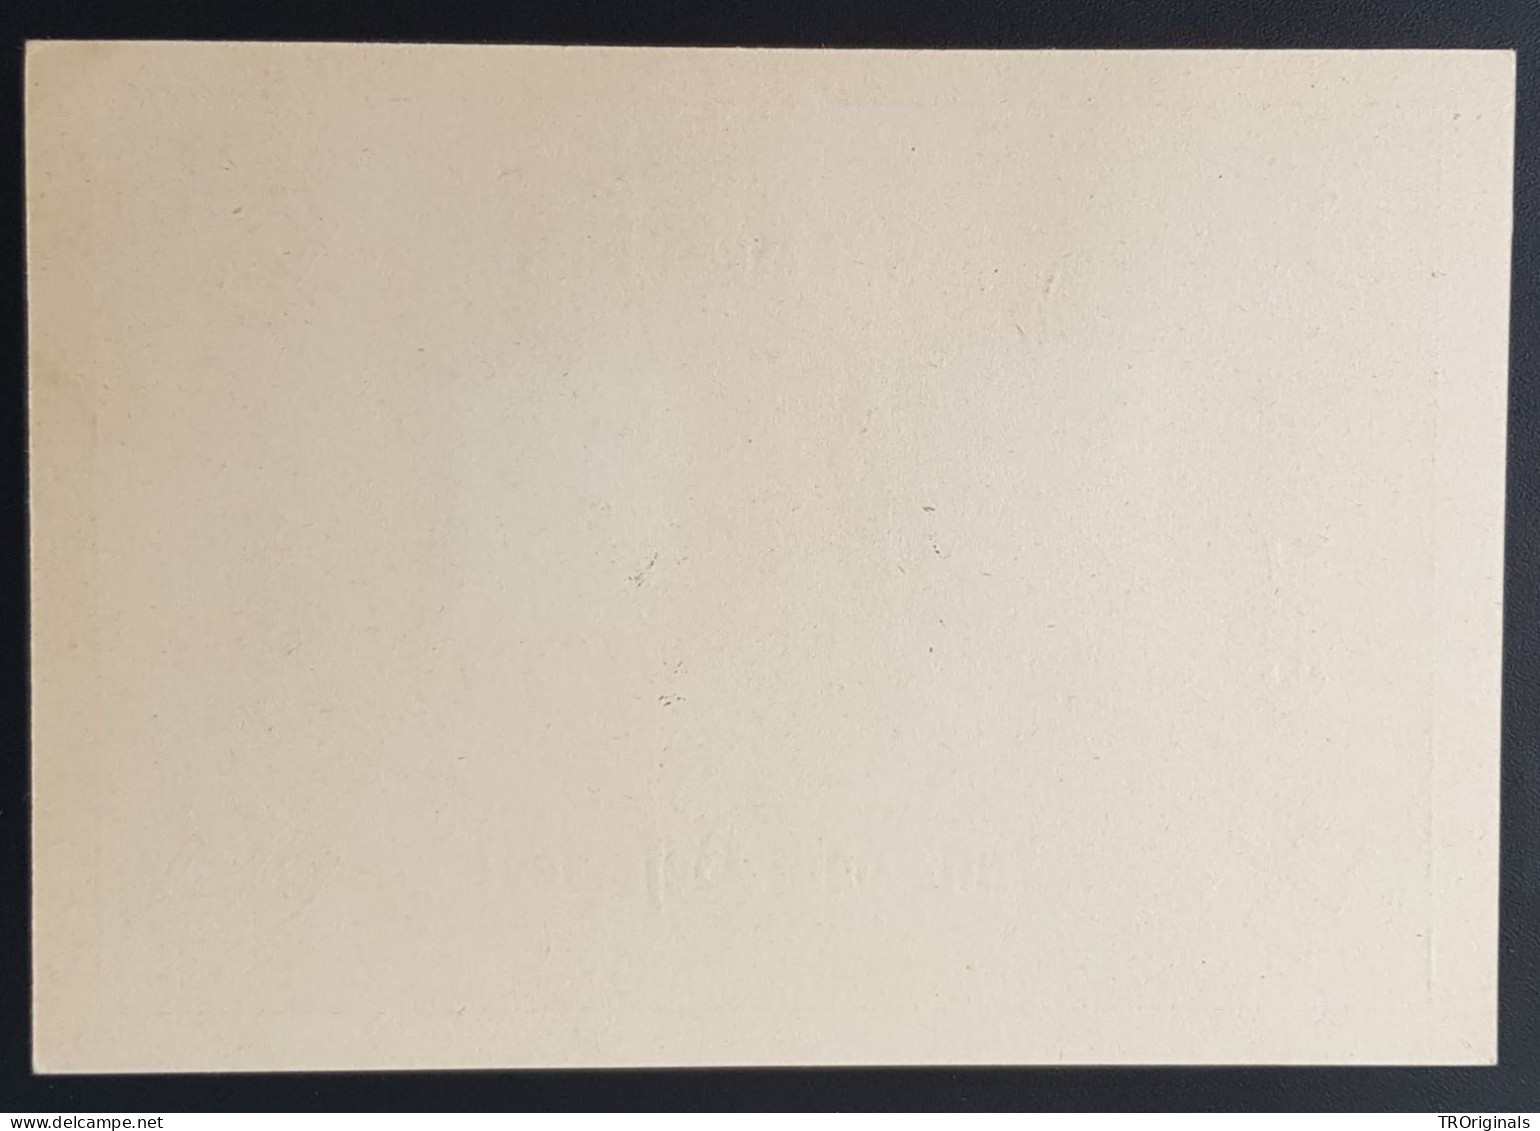 GERMANY THIRD 3rd REICH ORIGINAL  PROPAGANDA CARD THAKNS TO THE LIBERATOR - Guerra 1939-45